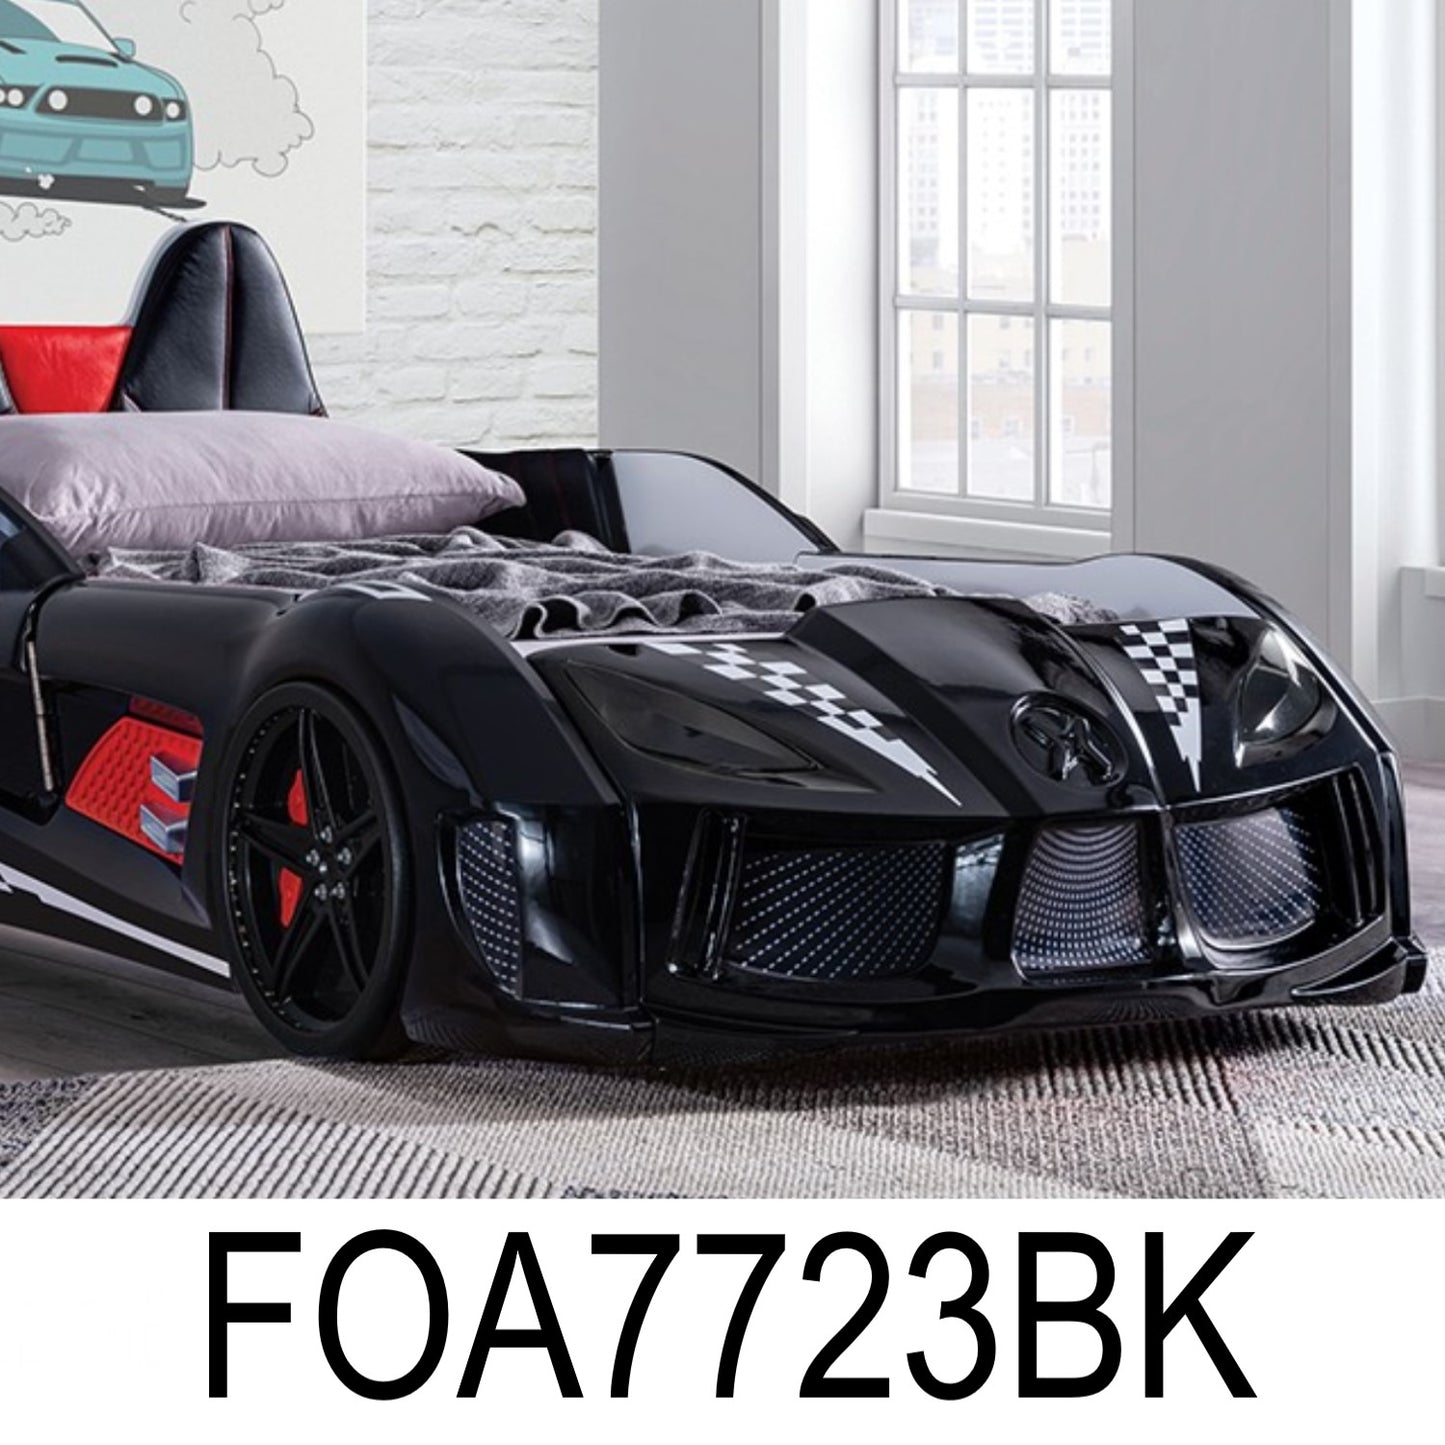 Black Trackster Twin Car Bed Frame